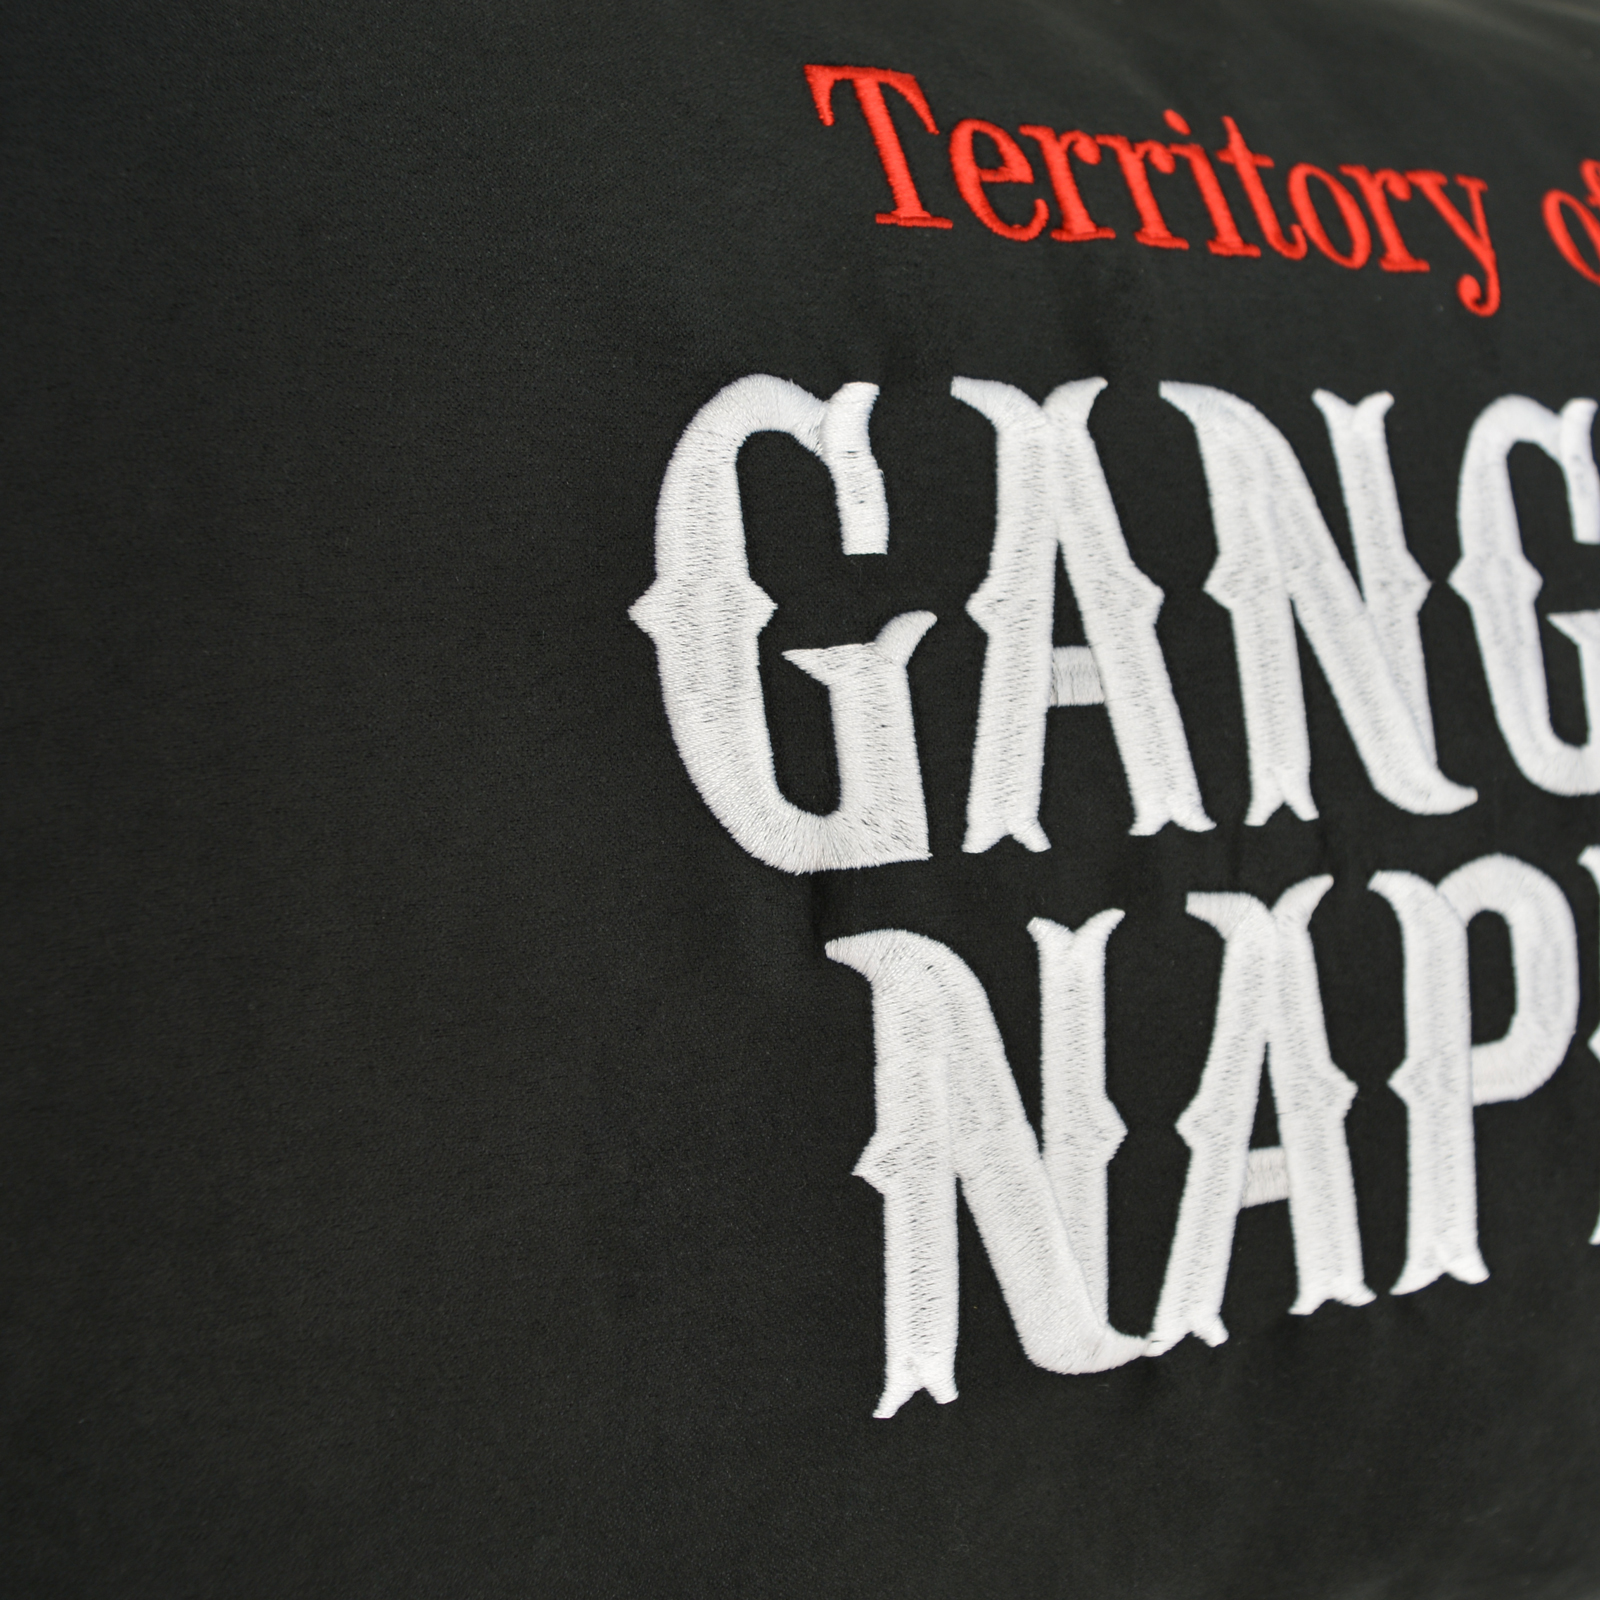 Gangsta Napper